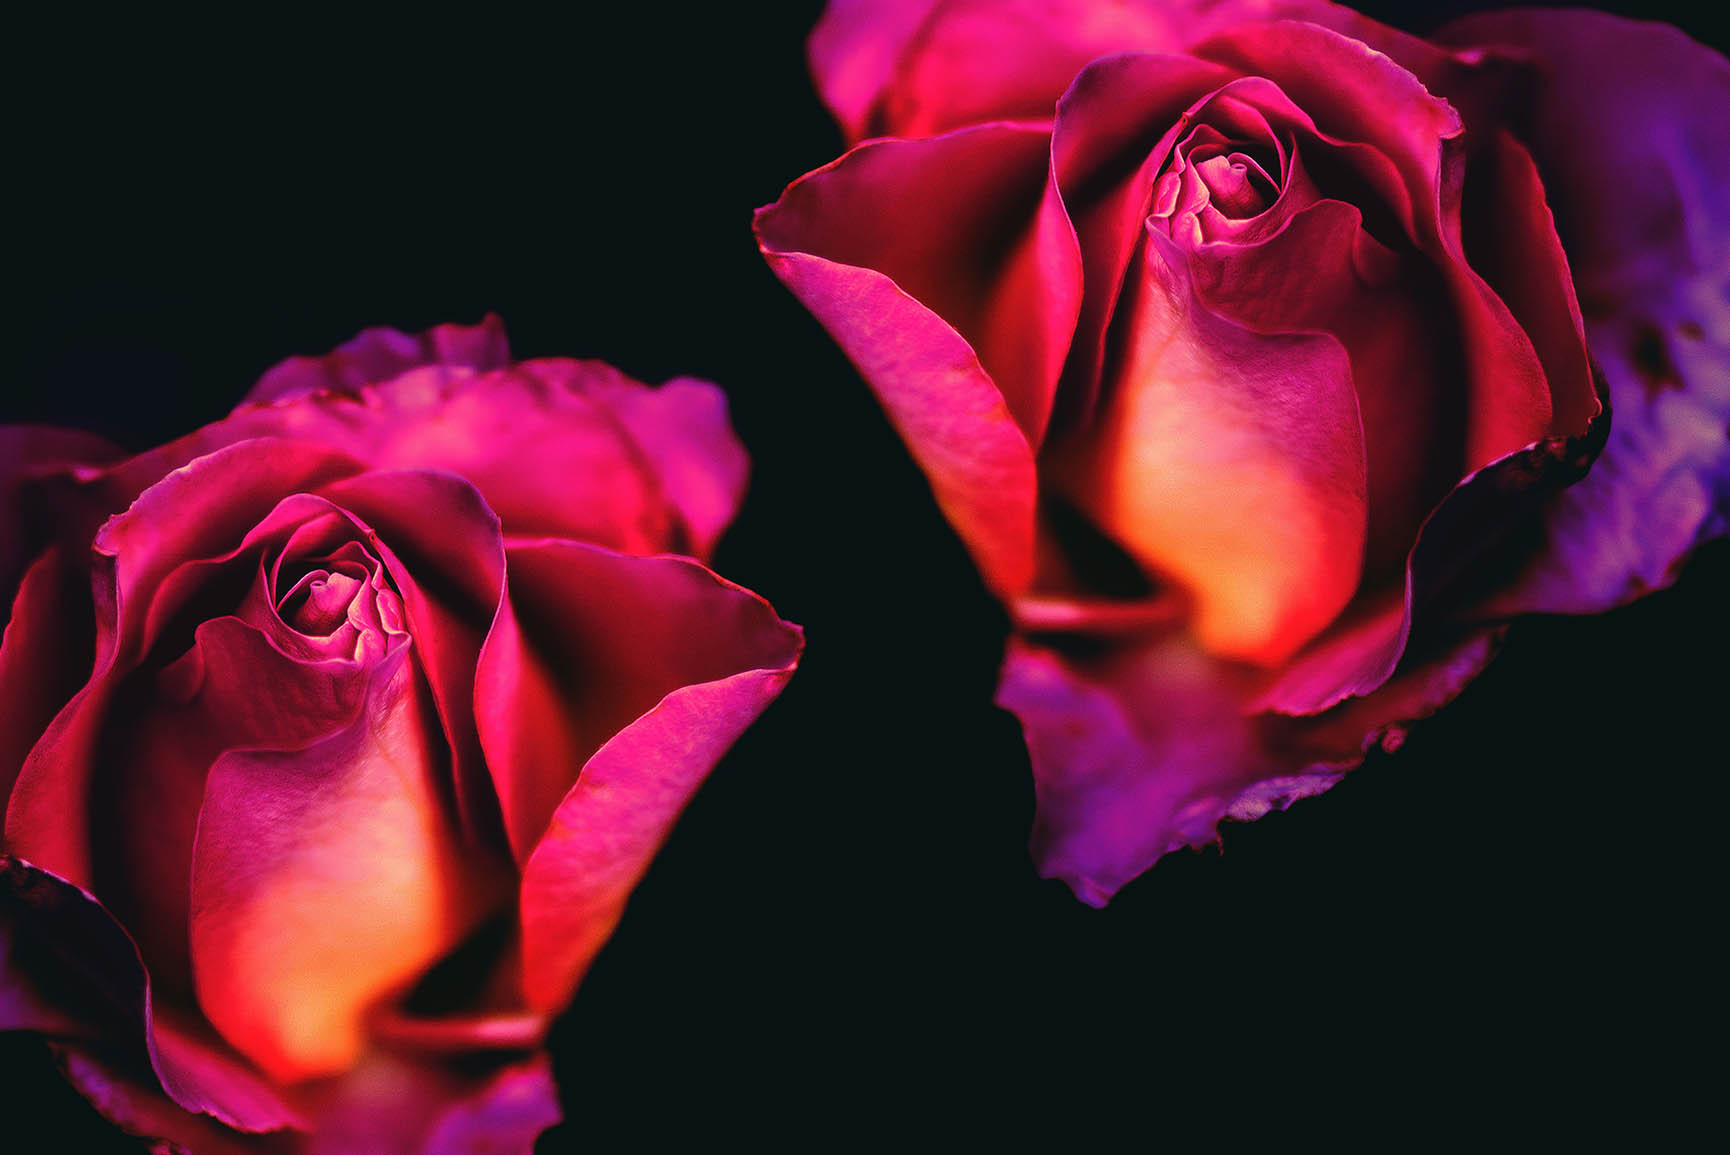 Romantic Roses iPhone X Wallpaper Preppy